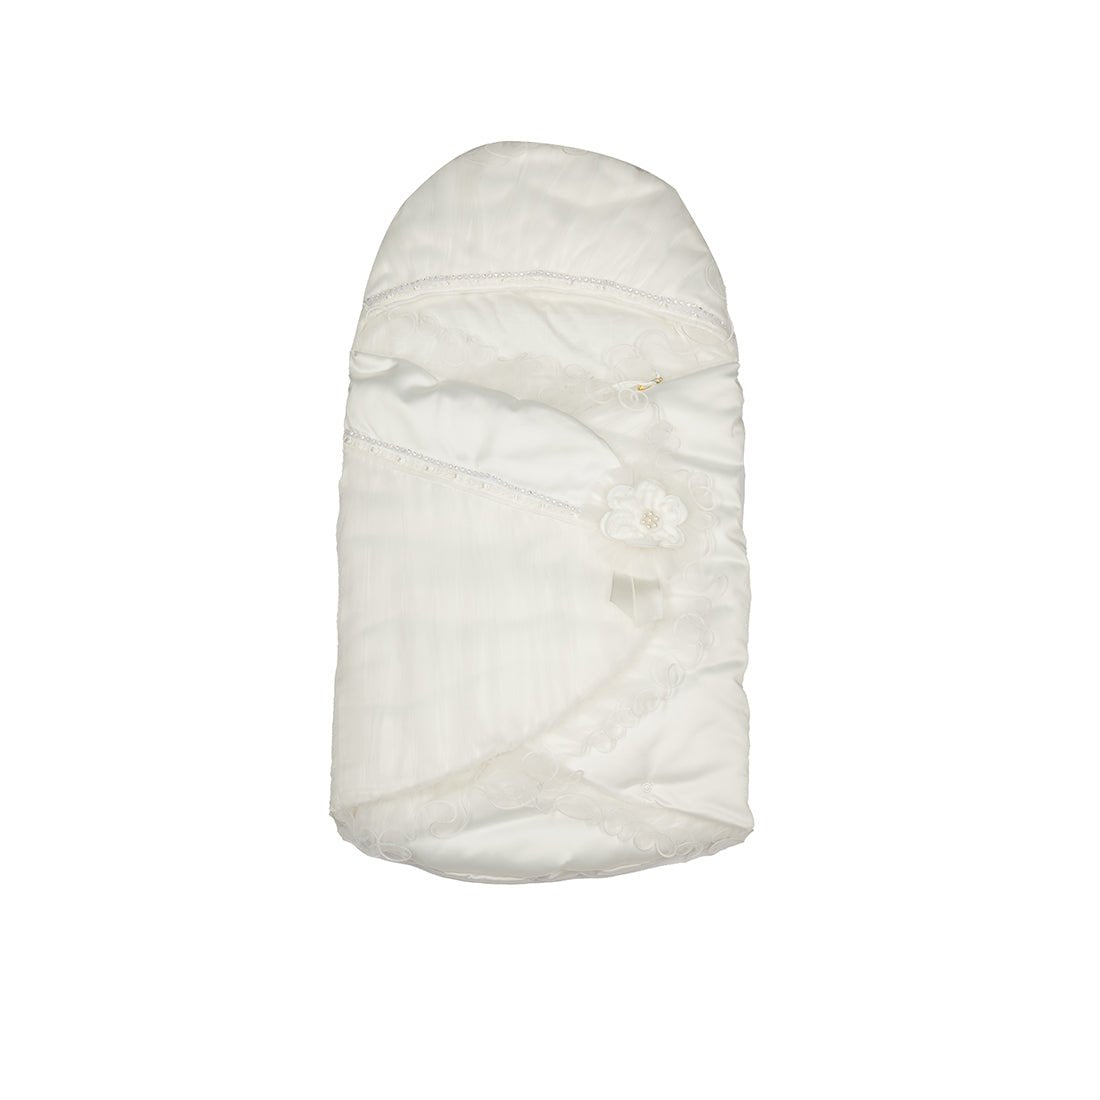 Couche Tot Brand New Baby Sleep Bag - mymadstore.com